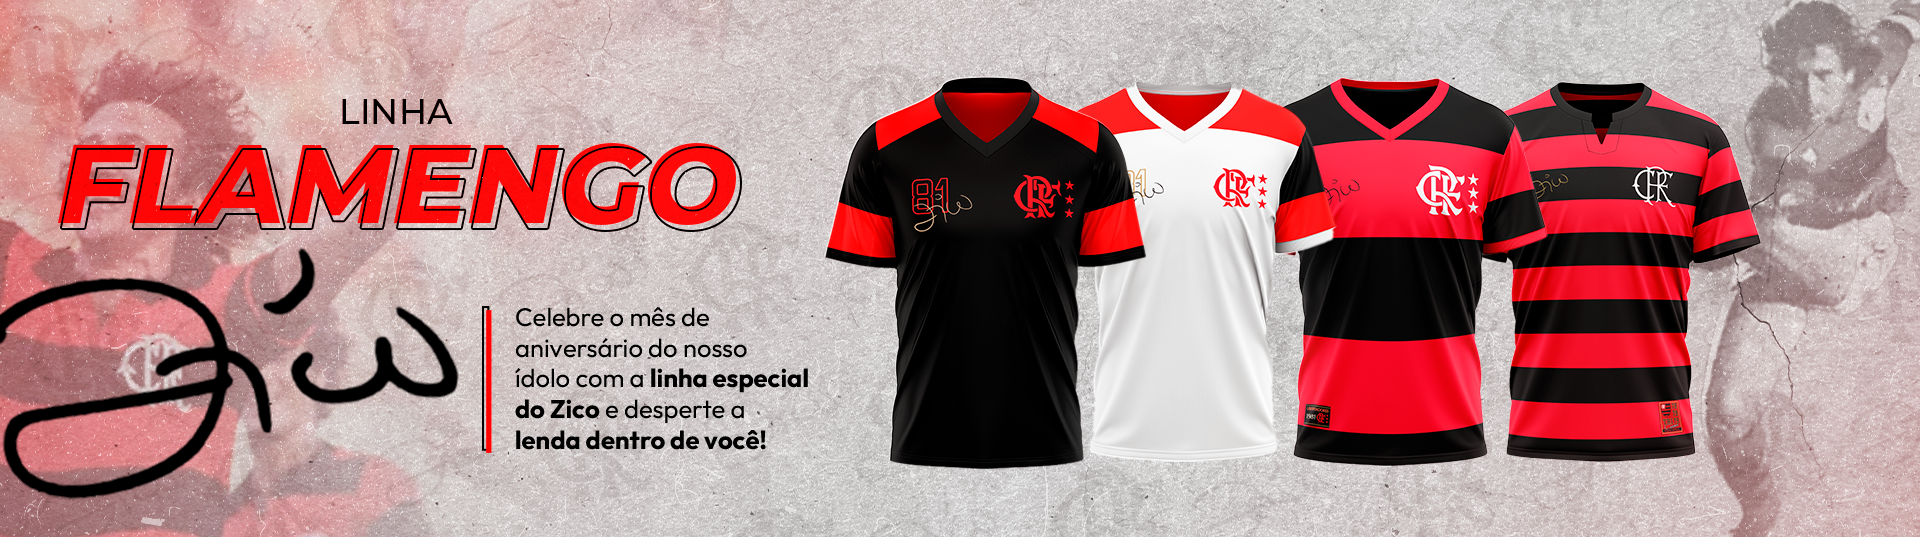 Camisa Flamengo (Zico)